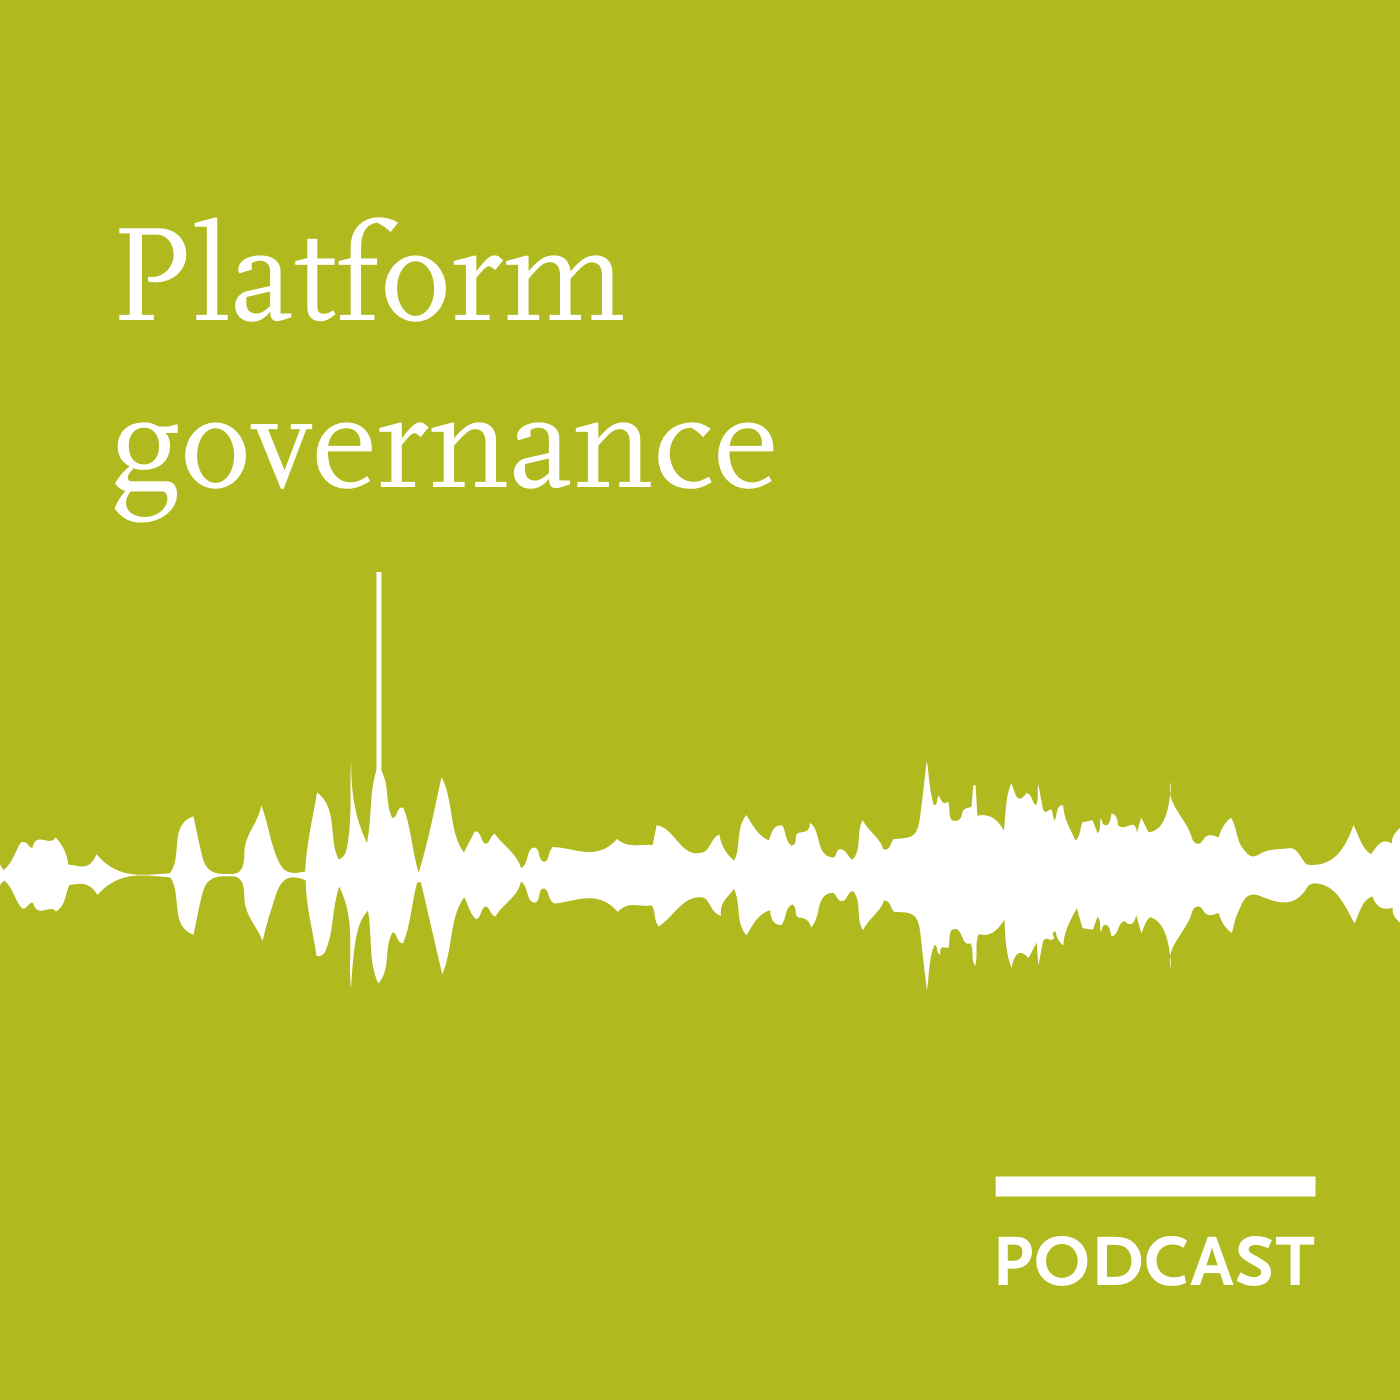 Platform governance